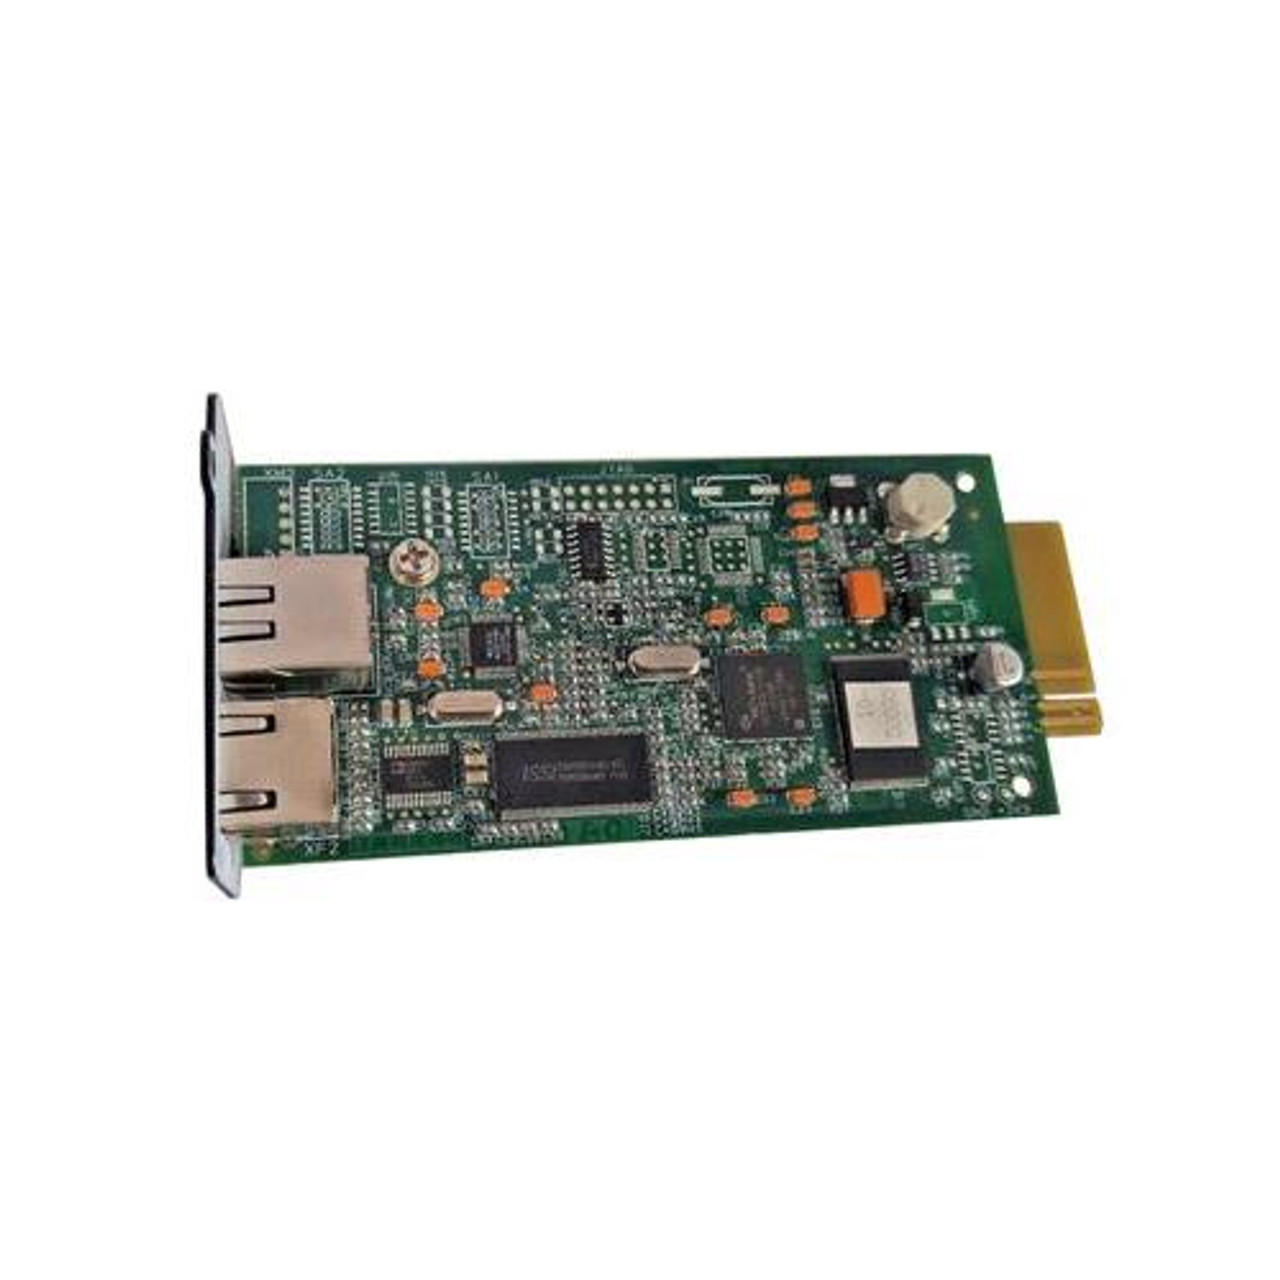 J9330A-ABA HP Procurve Msm750 Access Controller Network Management Device 2-ports En Fast En Gigabit En 1u